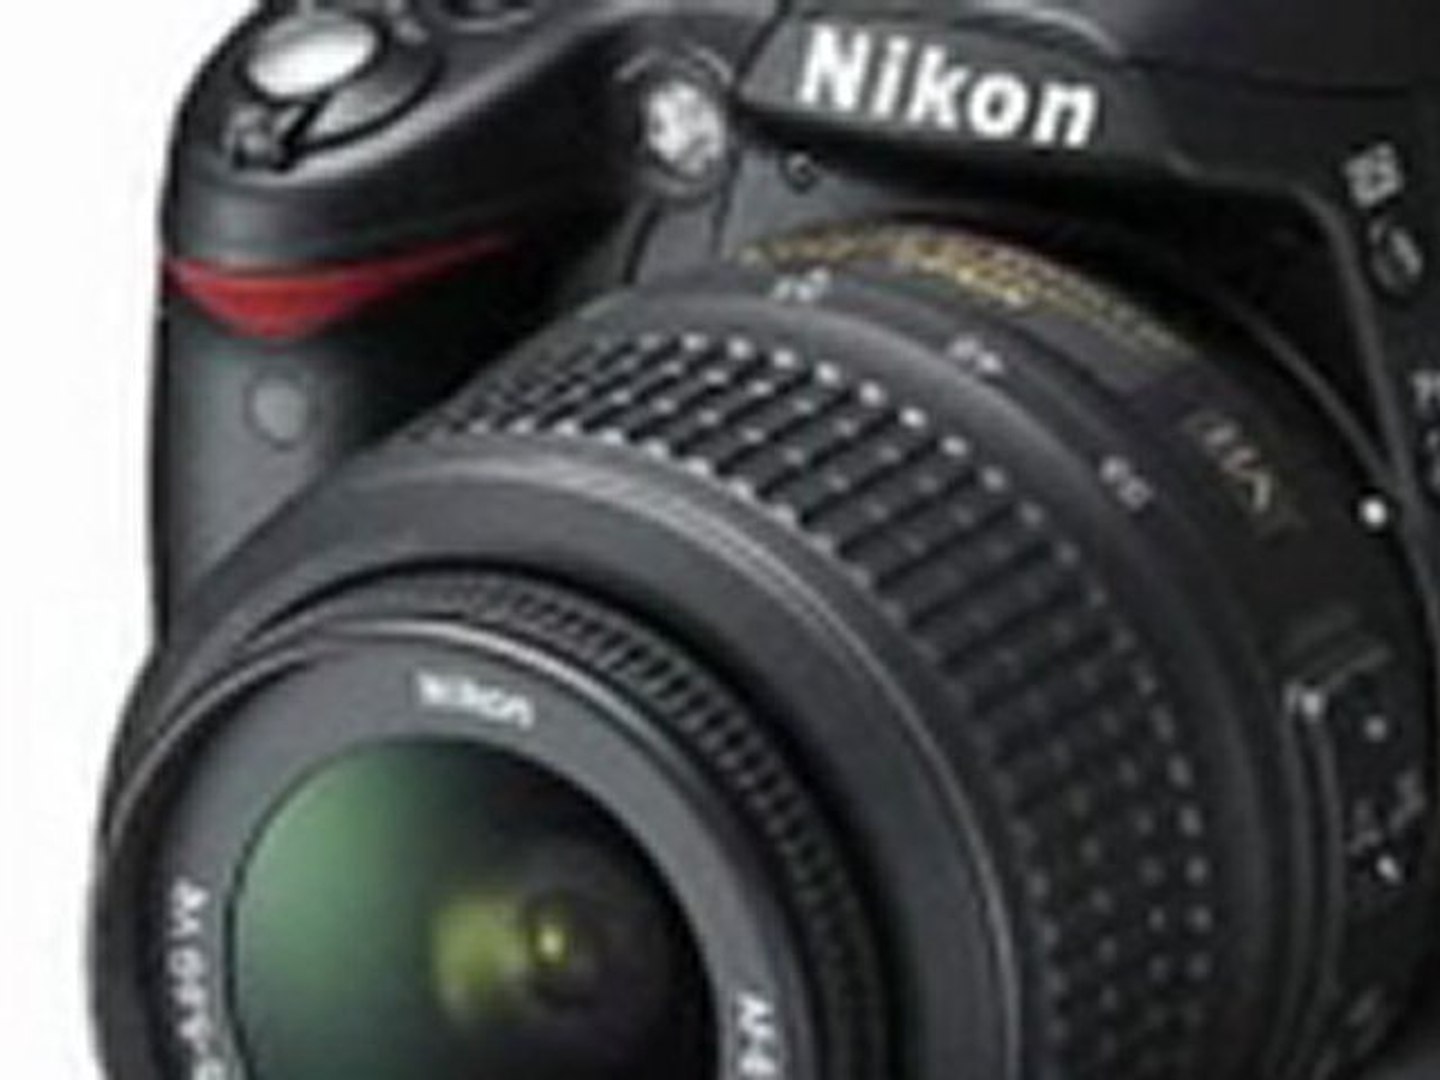 Best Bargain Review - Nikon D3000 10.2MP Digital SLR Cam - video Dailymotion